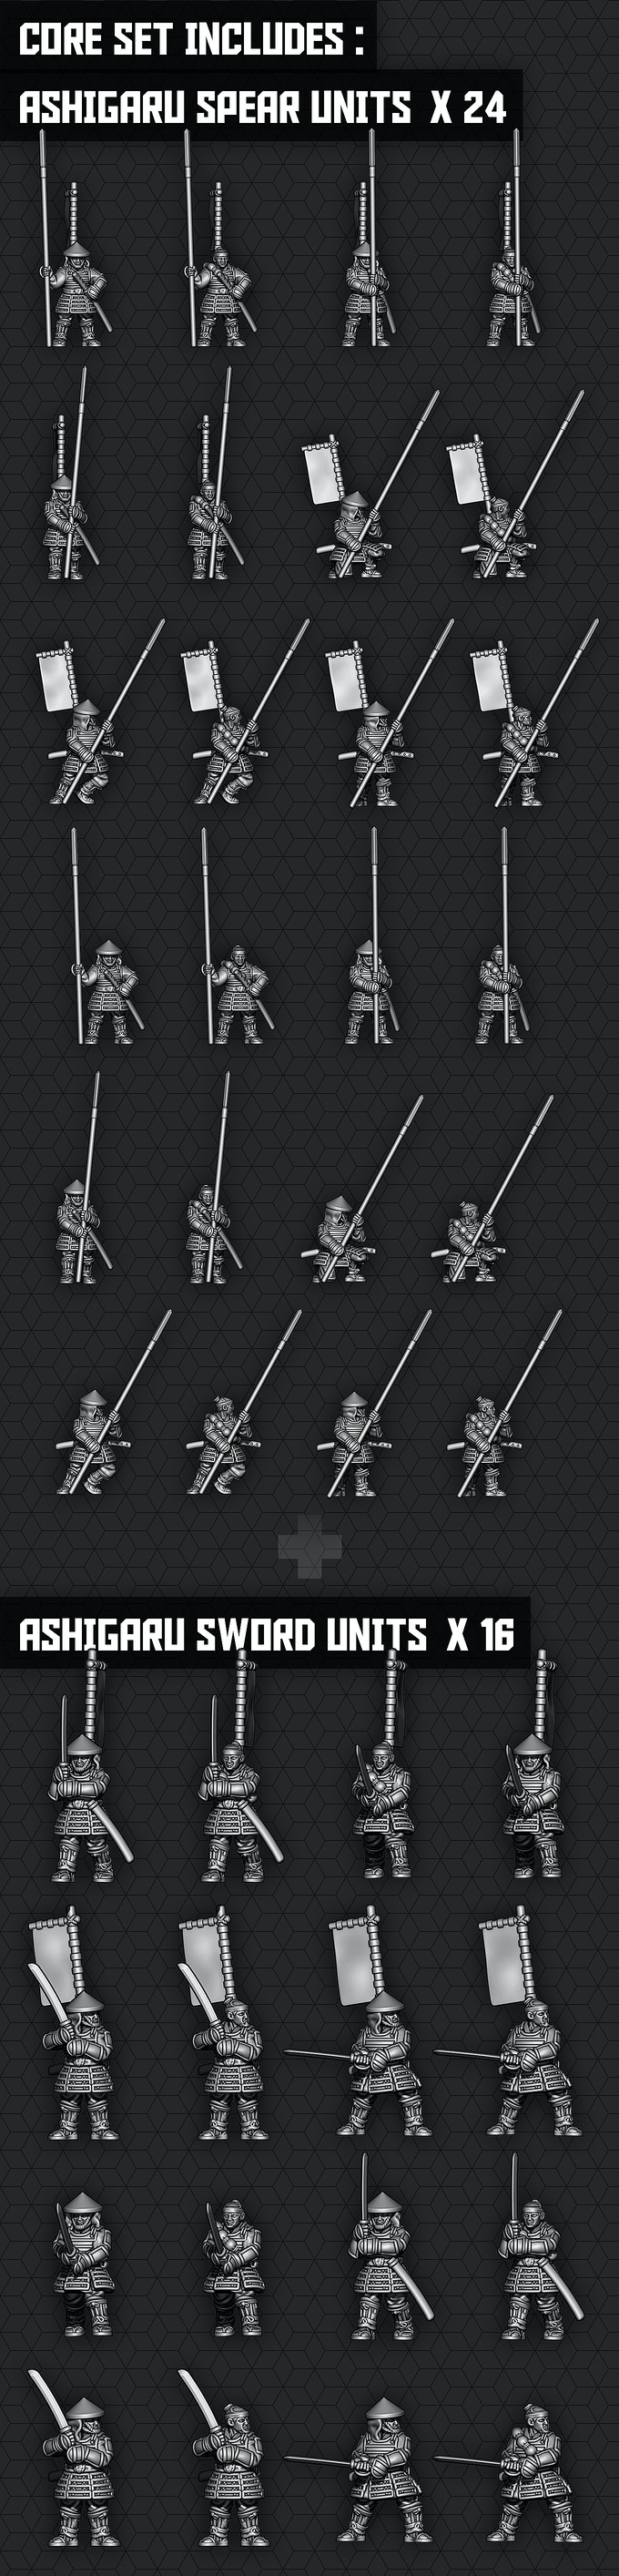 Samurai Warfare Core Set #3 - Smol Miniatures